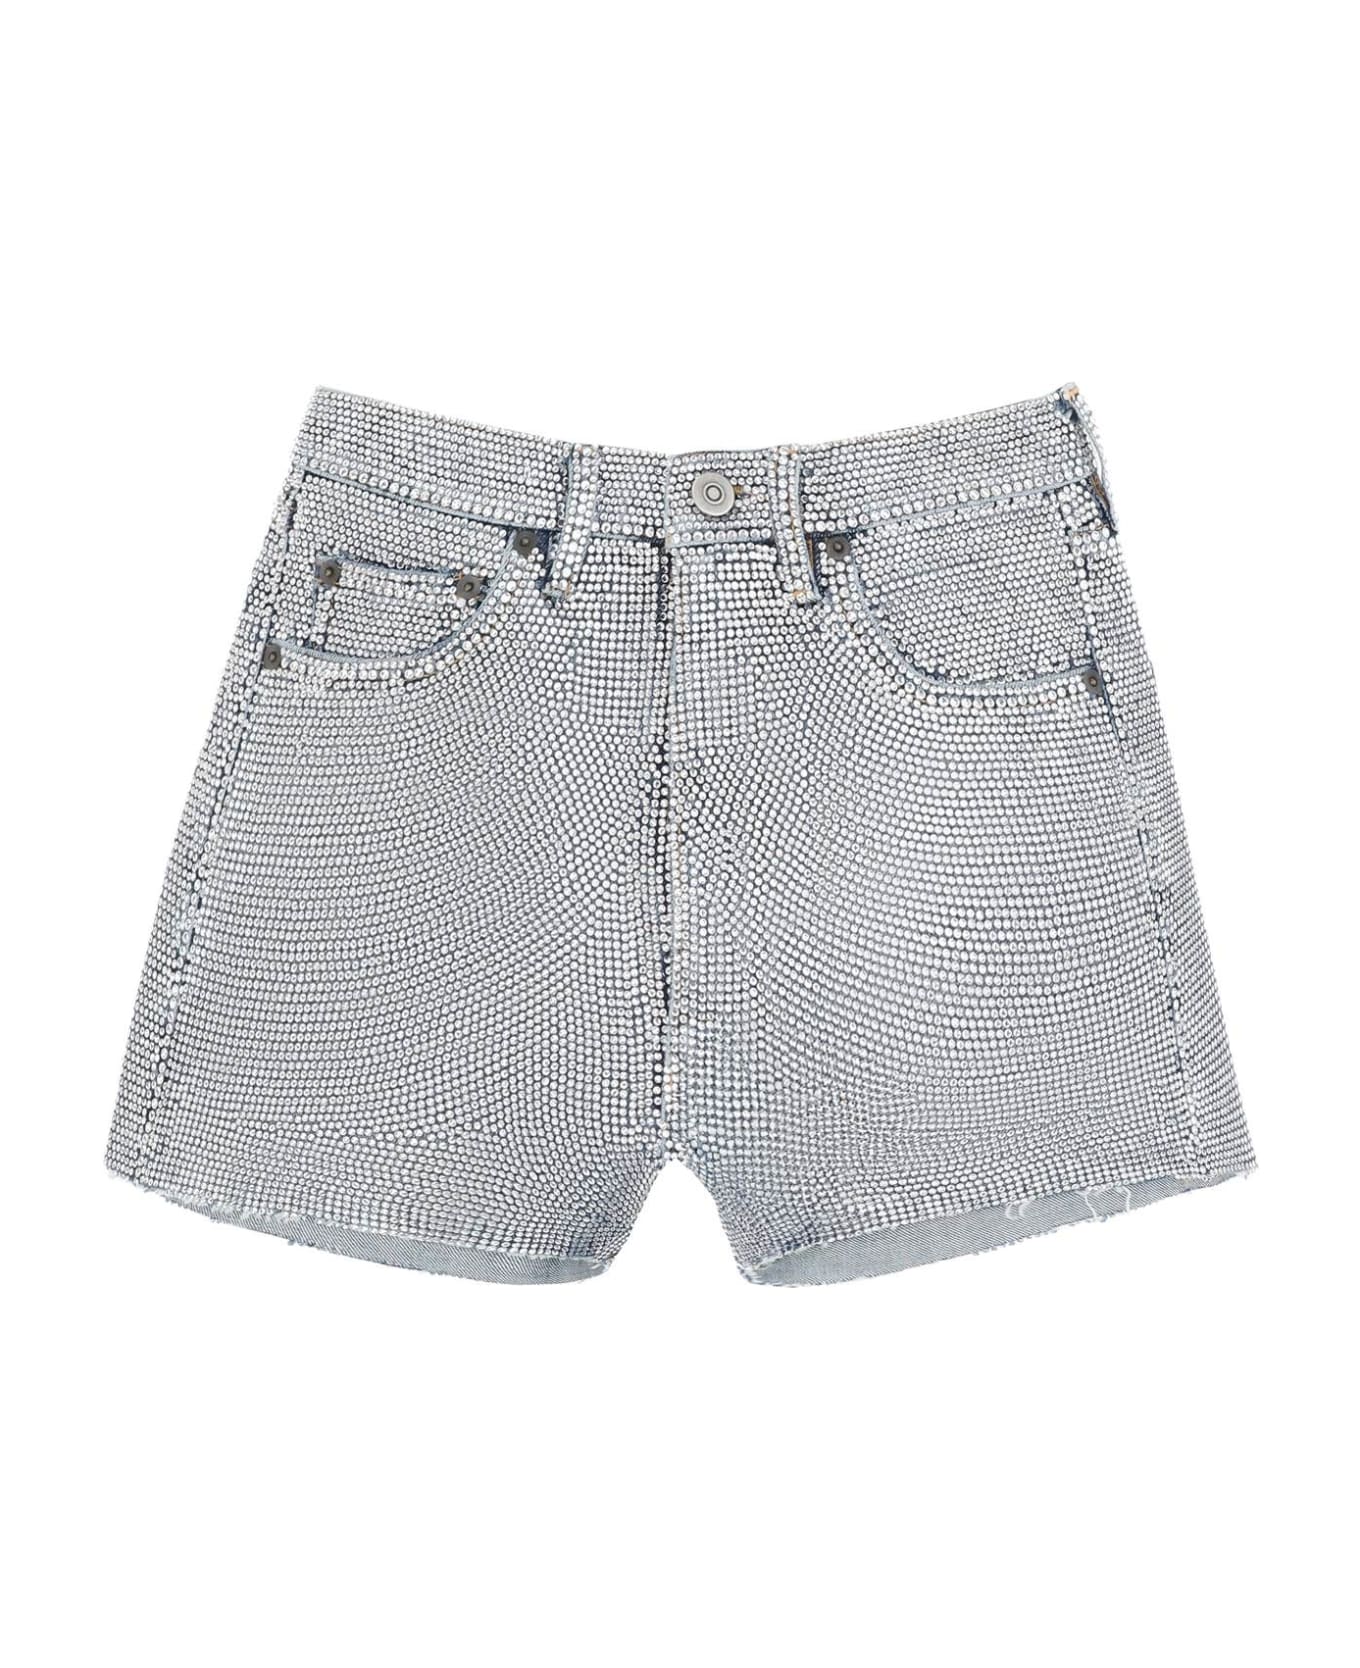 Maison Margiela Shorts - Silver ショートパンツ